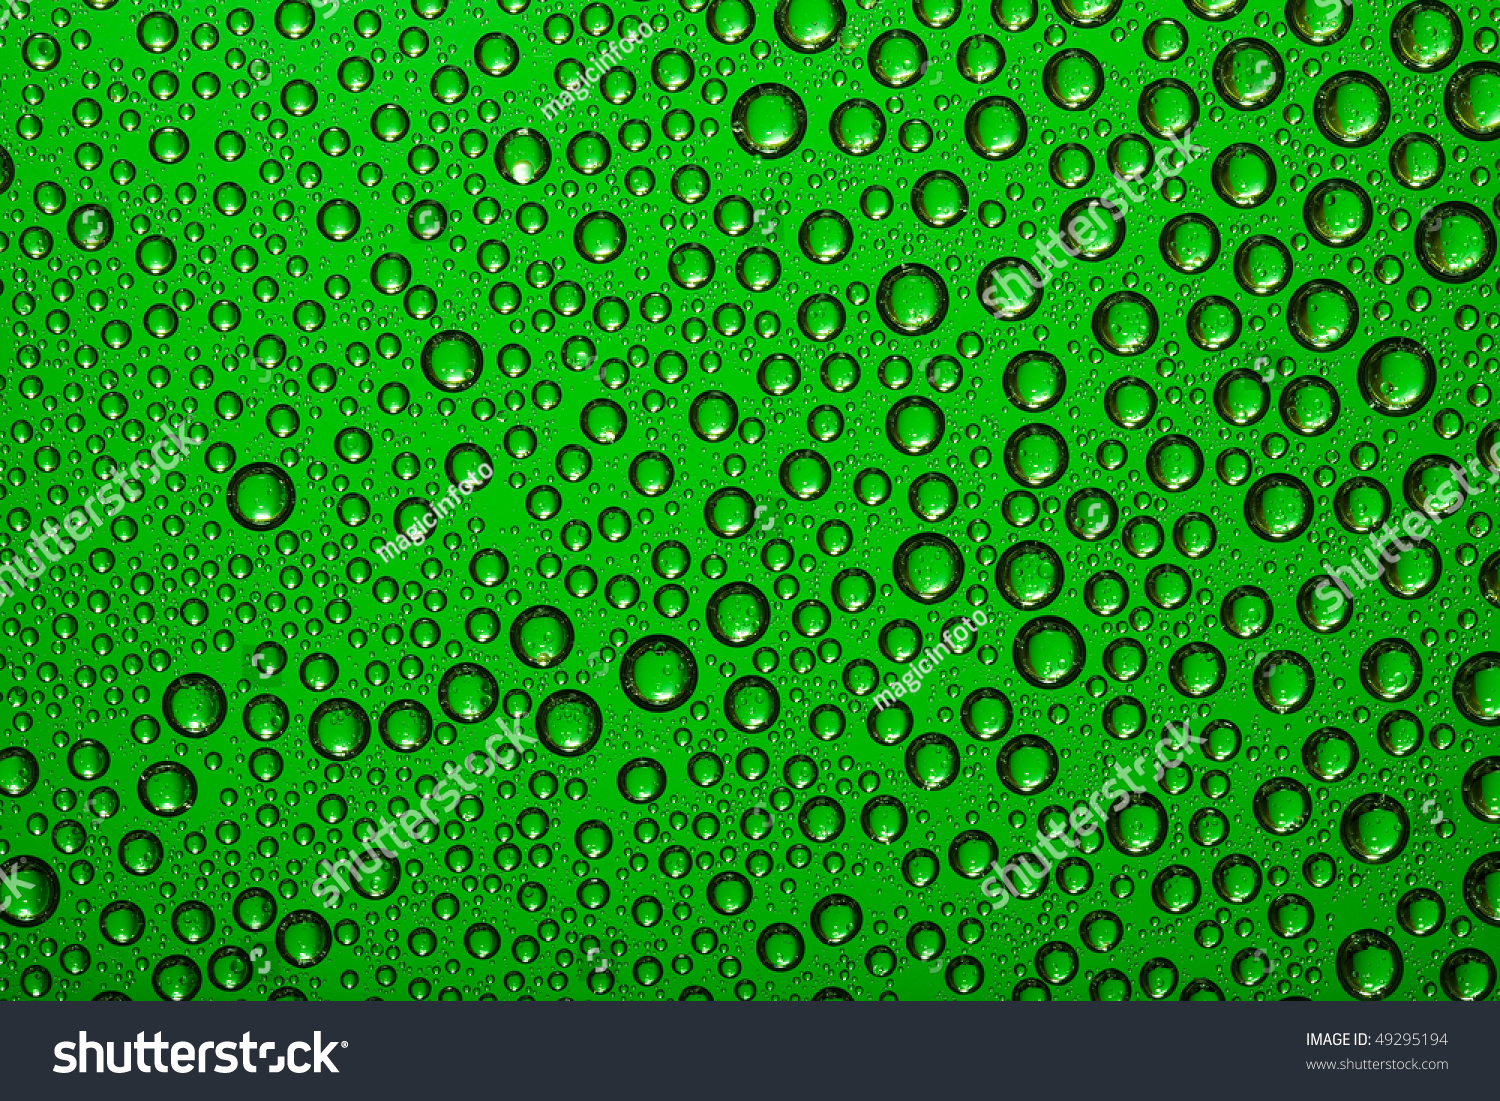 Water Drops On Green Glass Stock Photo 49295194 : Shutterstock